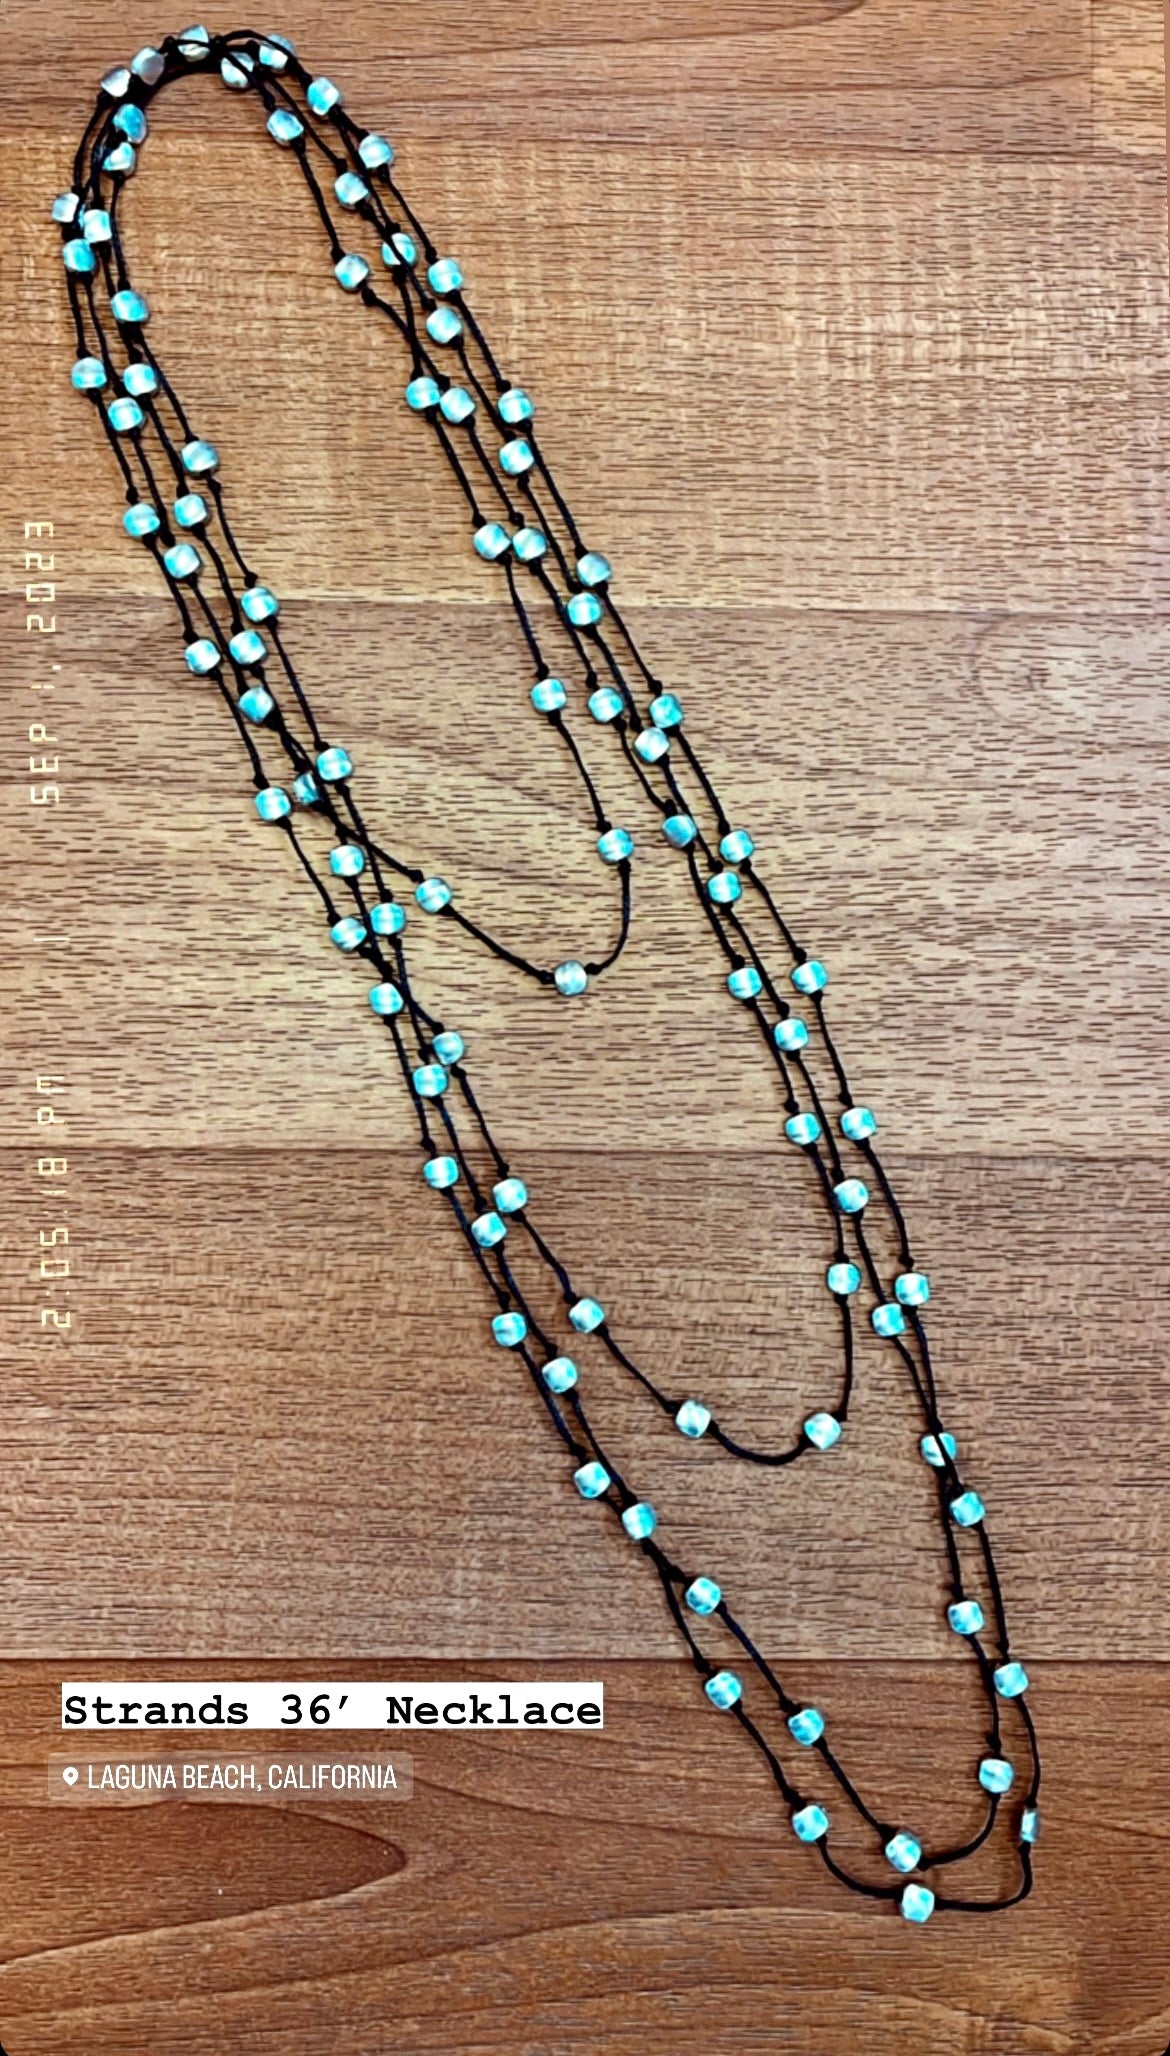 Strands 36' Necklace